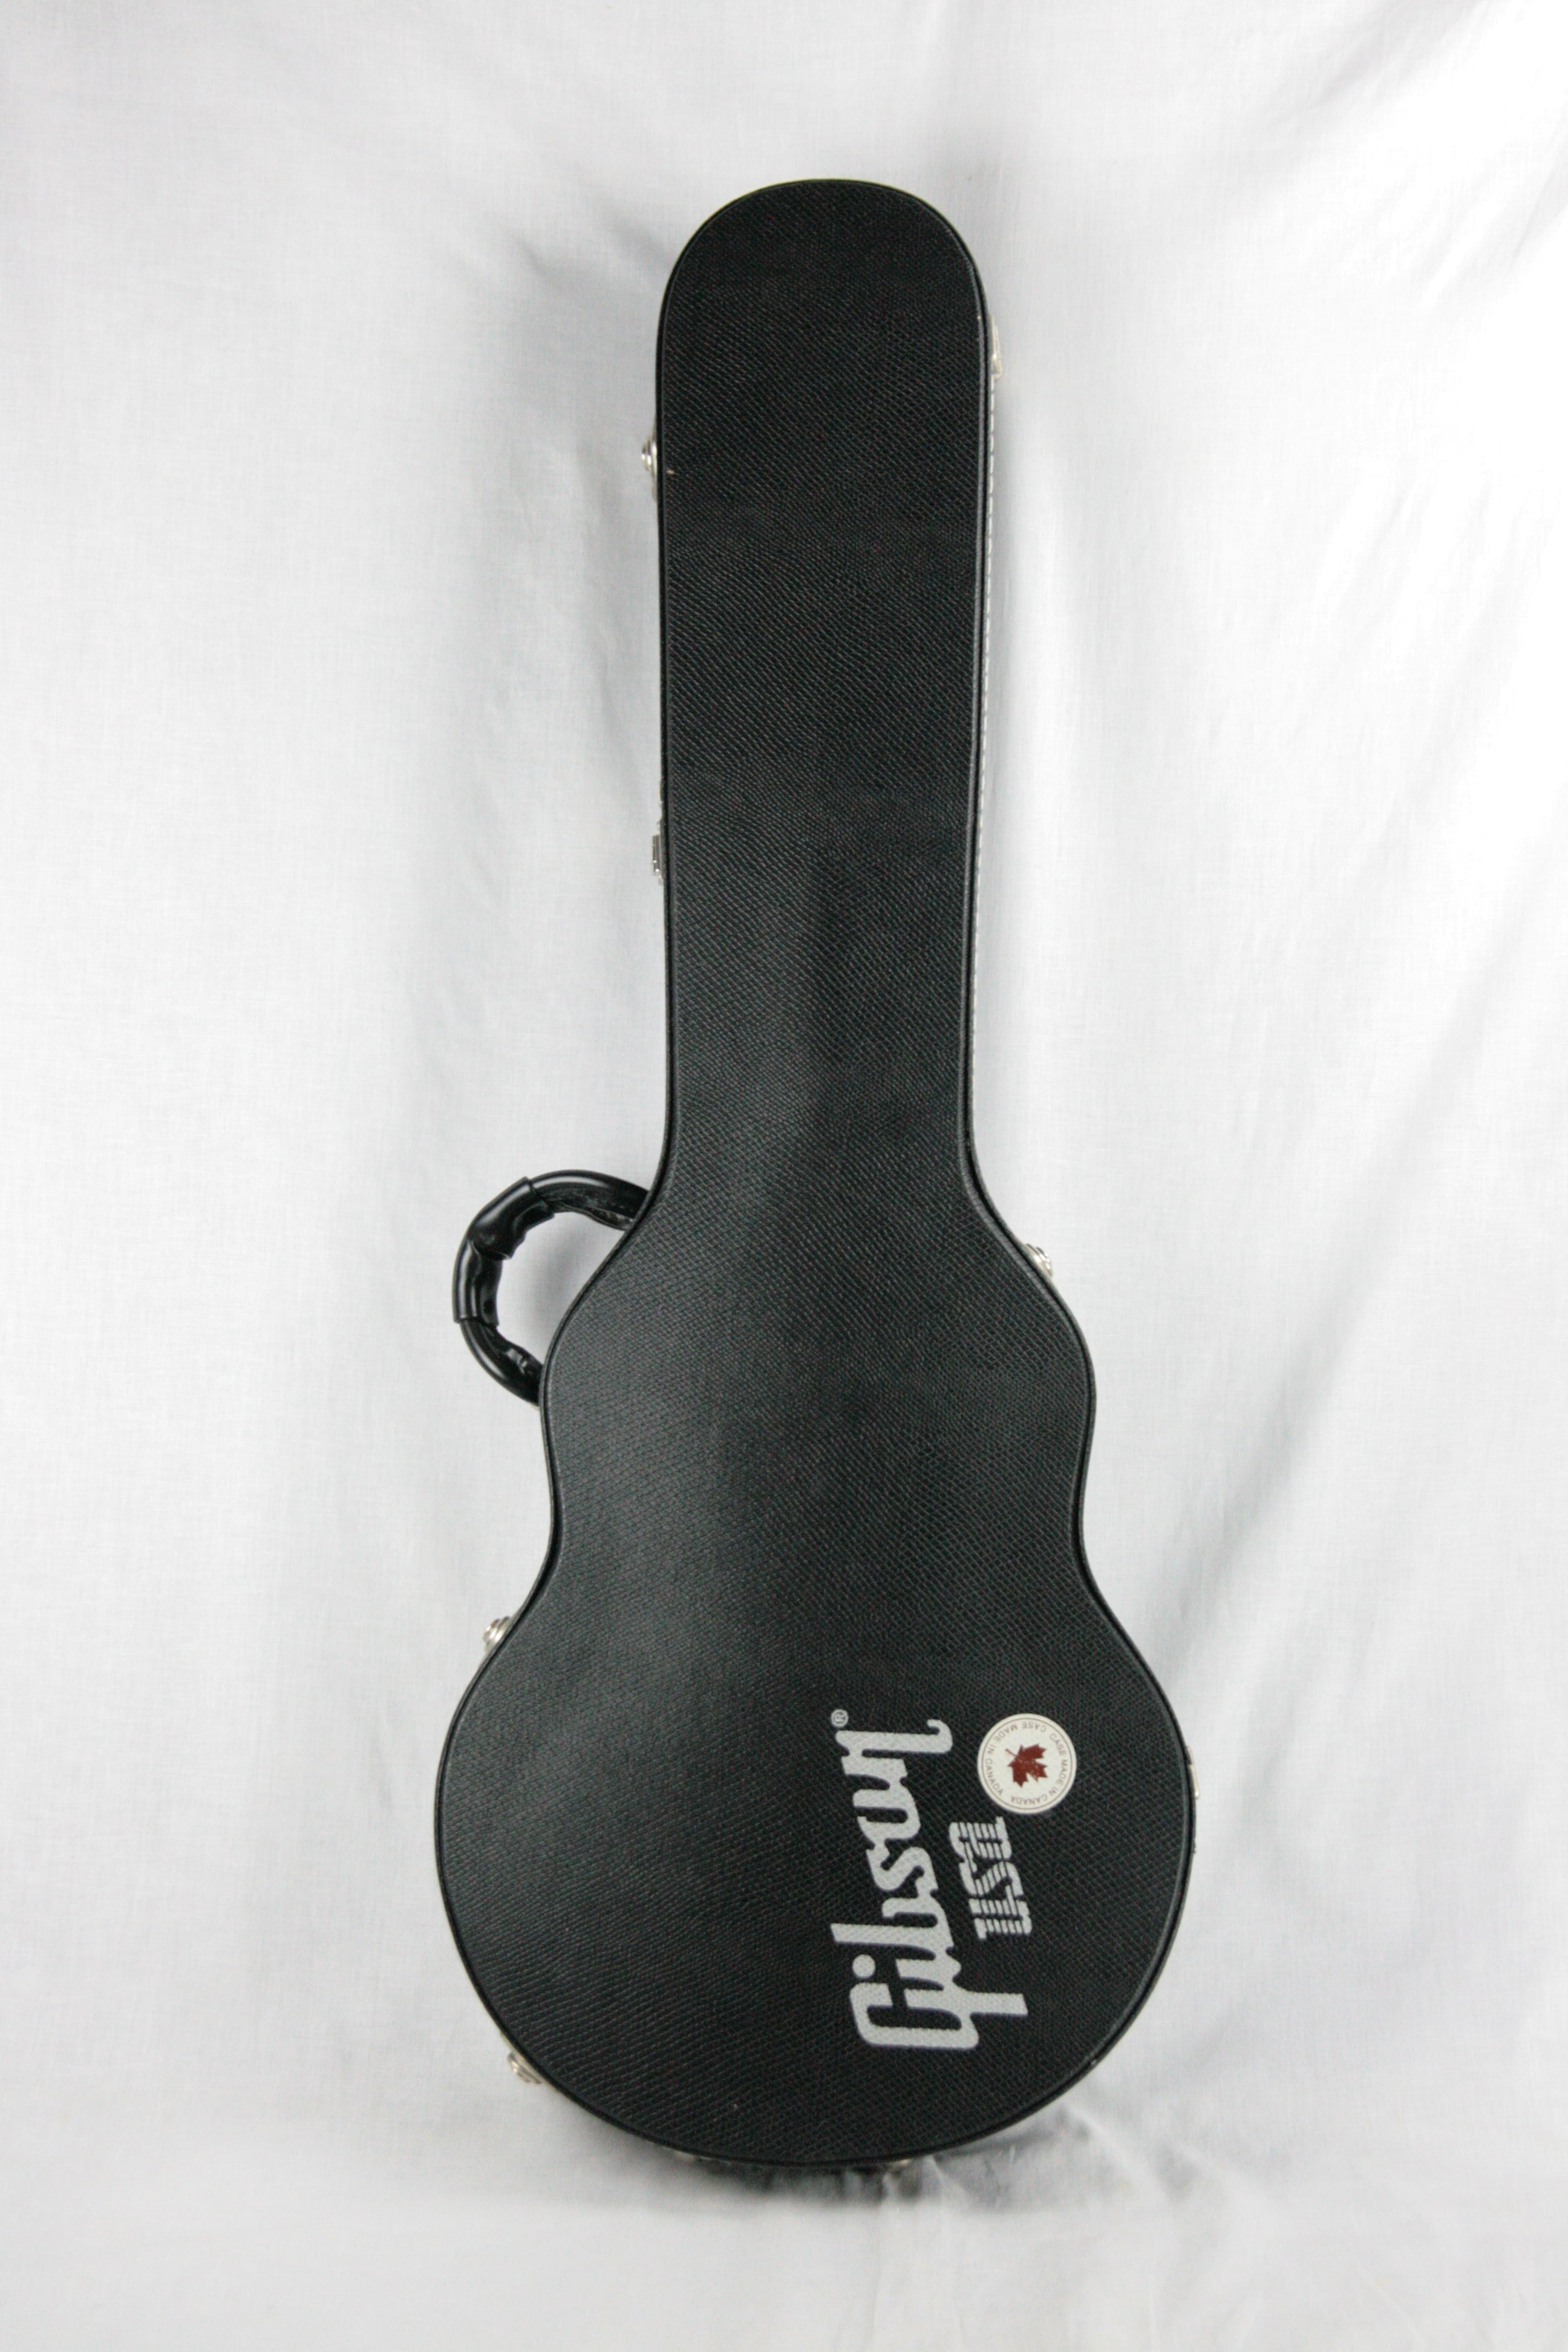 *SOLD*  2005 Gibson Les Paul Standard Flametop Faded Cherry Sunburst plus Zebra Pickups!